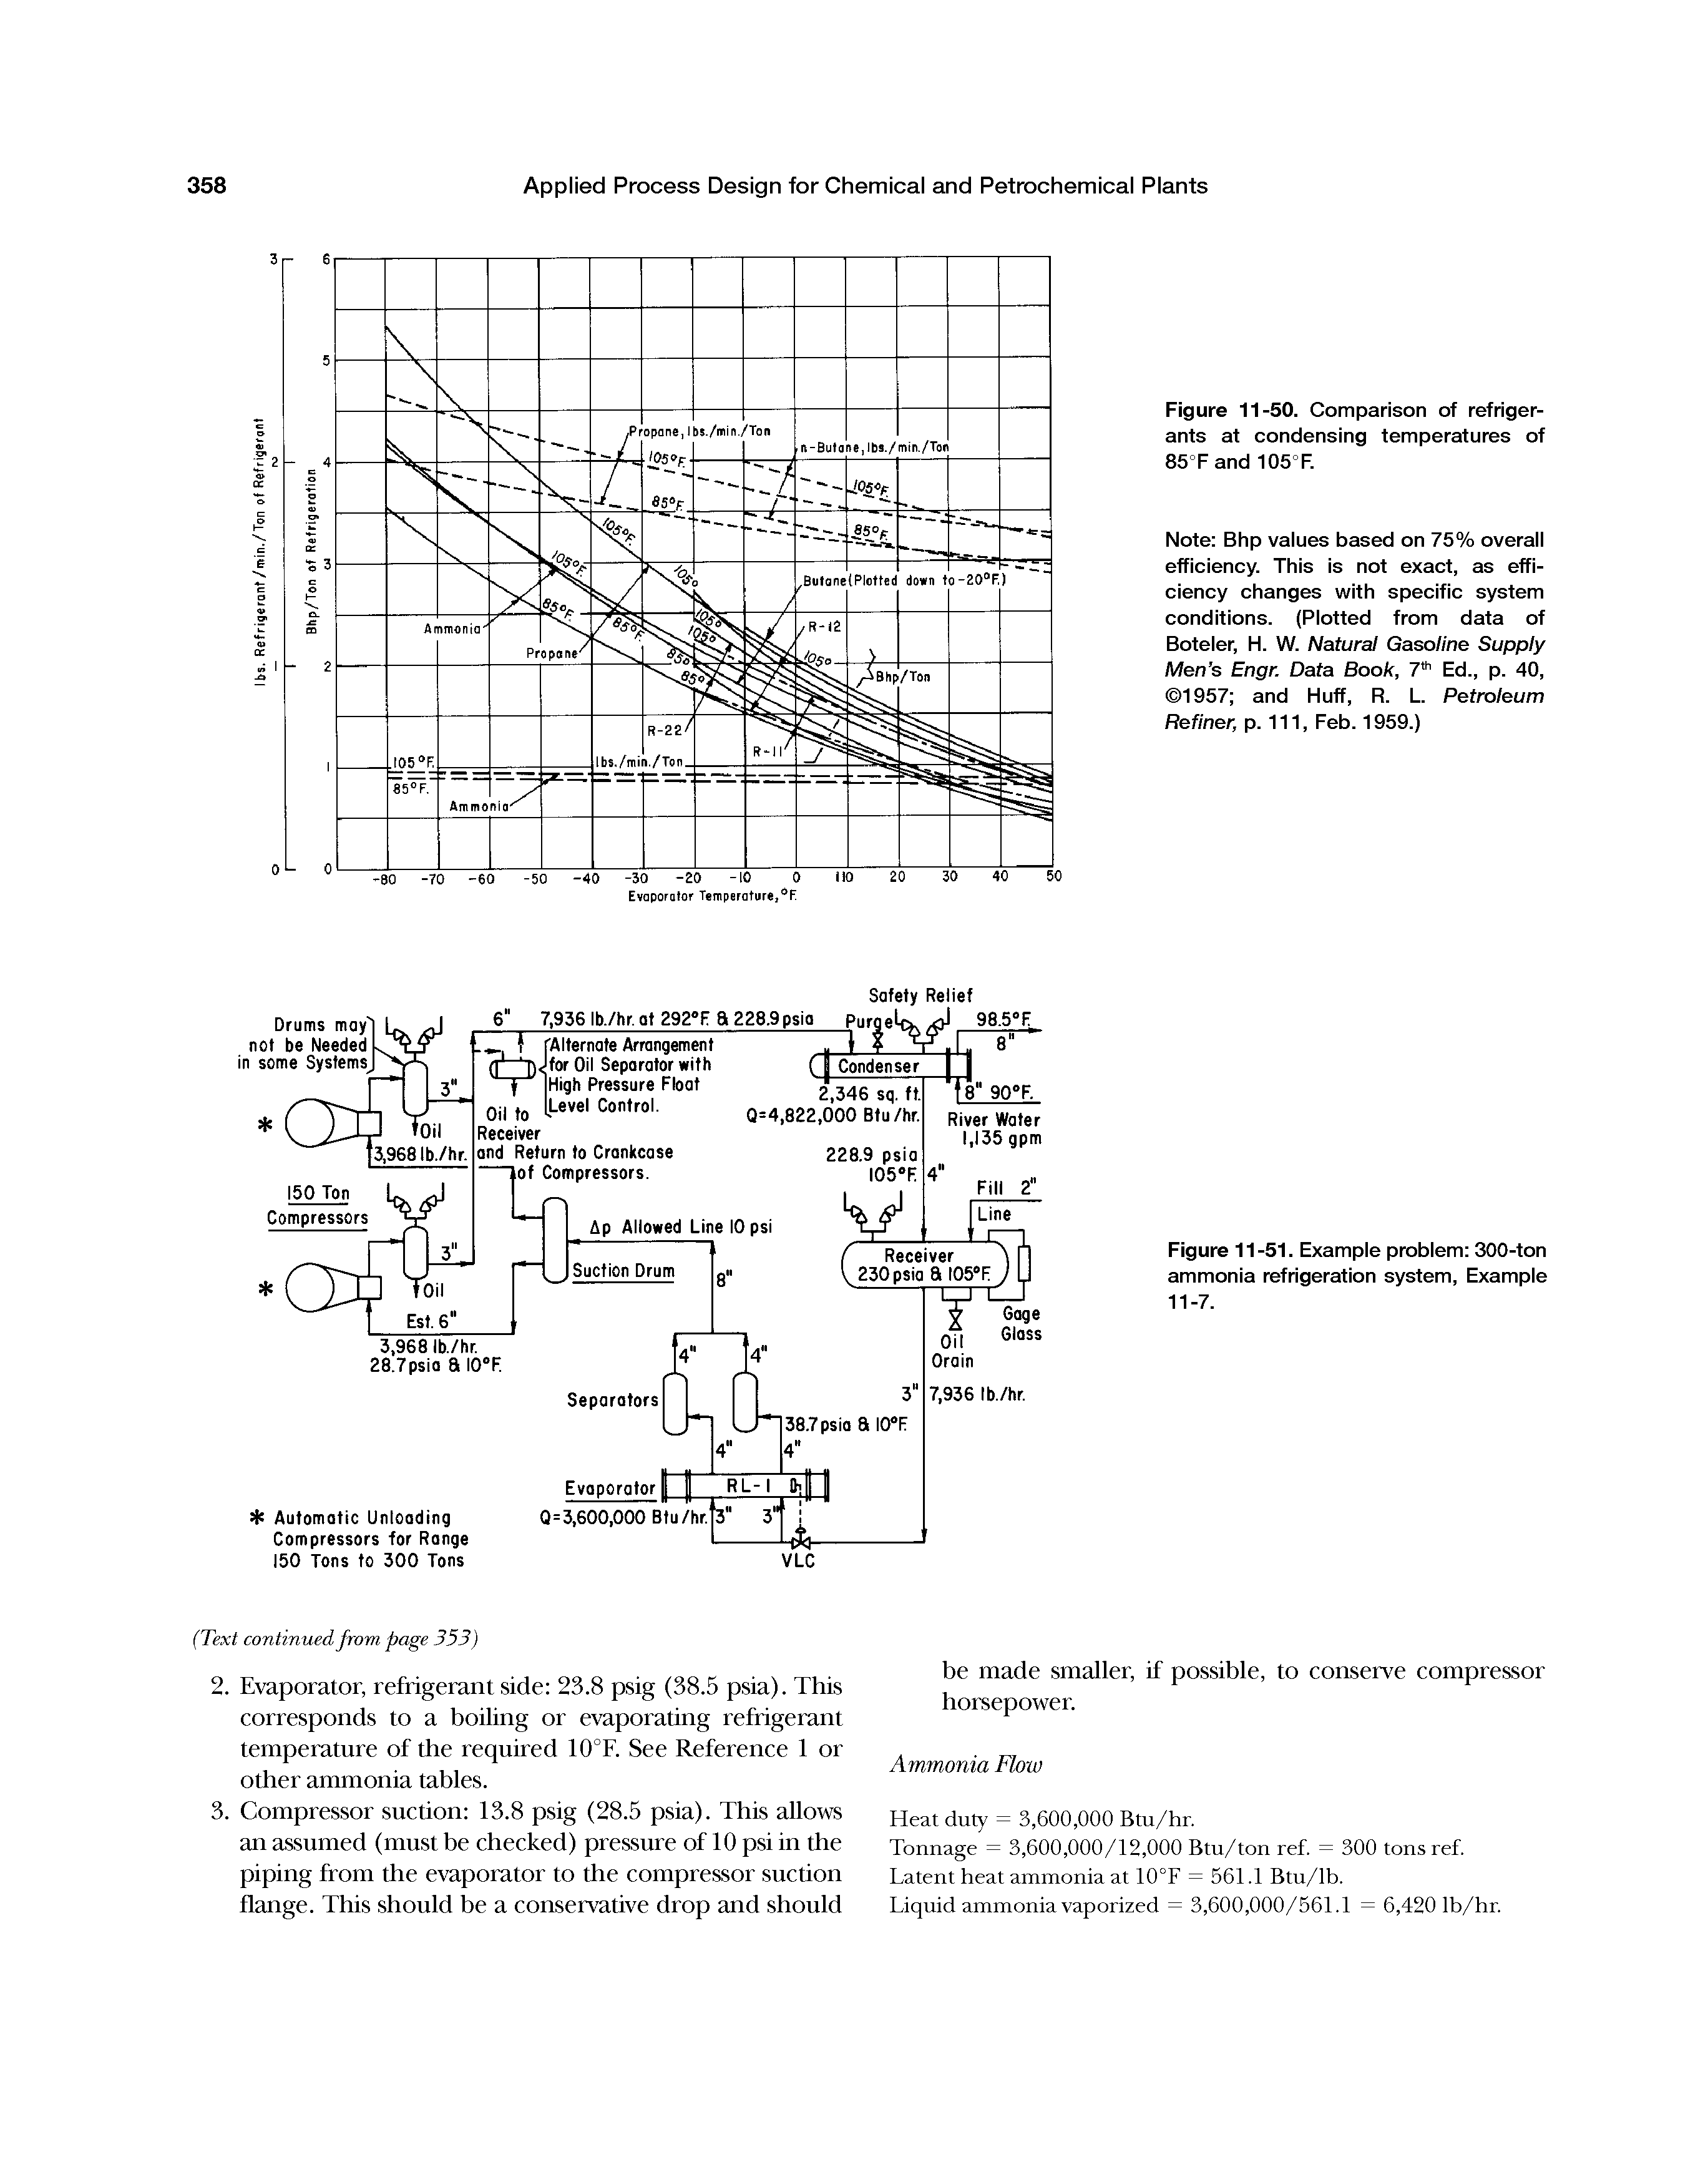 Figure 11-51. Example problem 300-ton ammonia refrigeration system. Example 11-7.